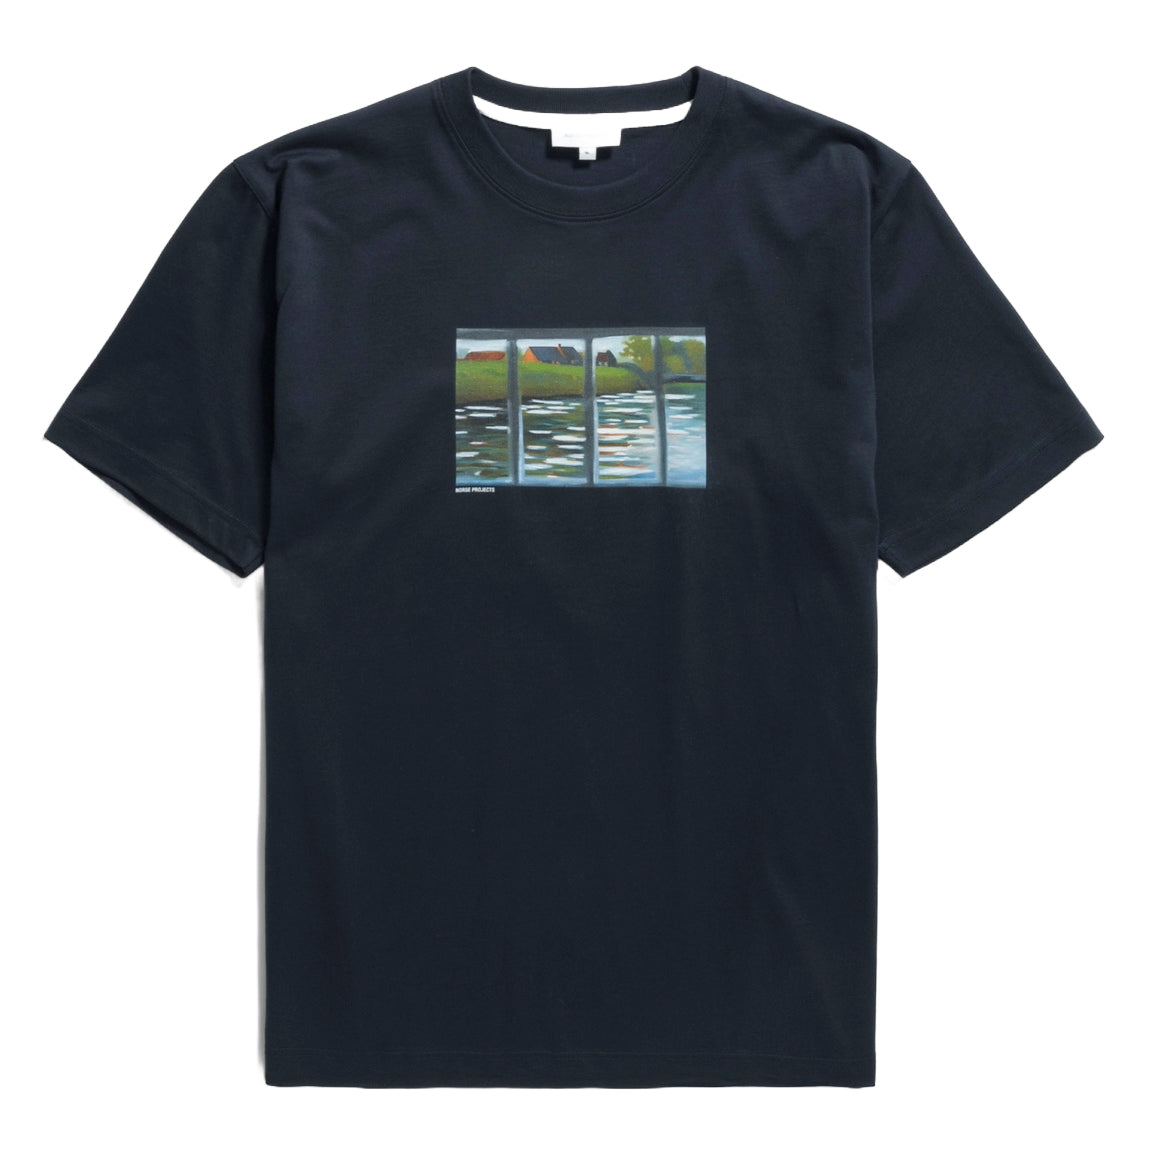 Johannes Canal Print T-Shirt - Dark Navy